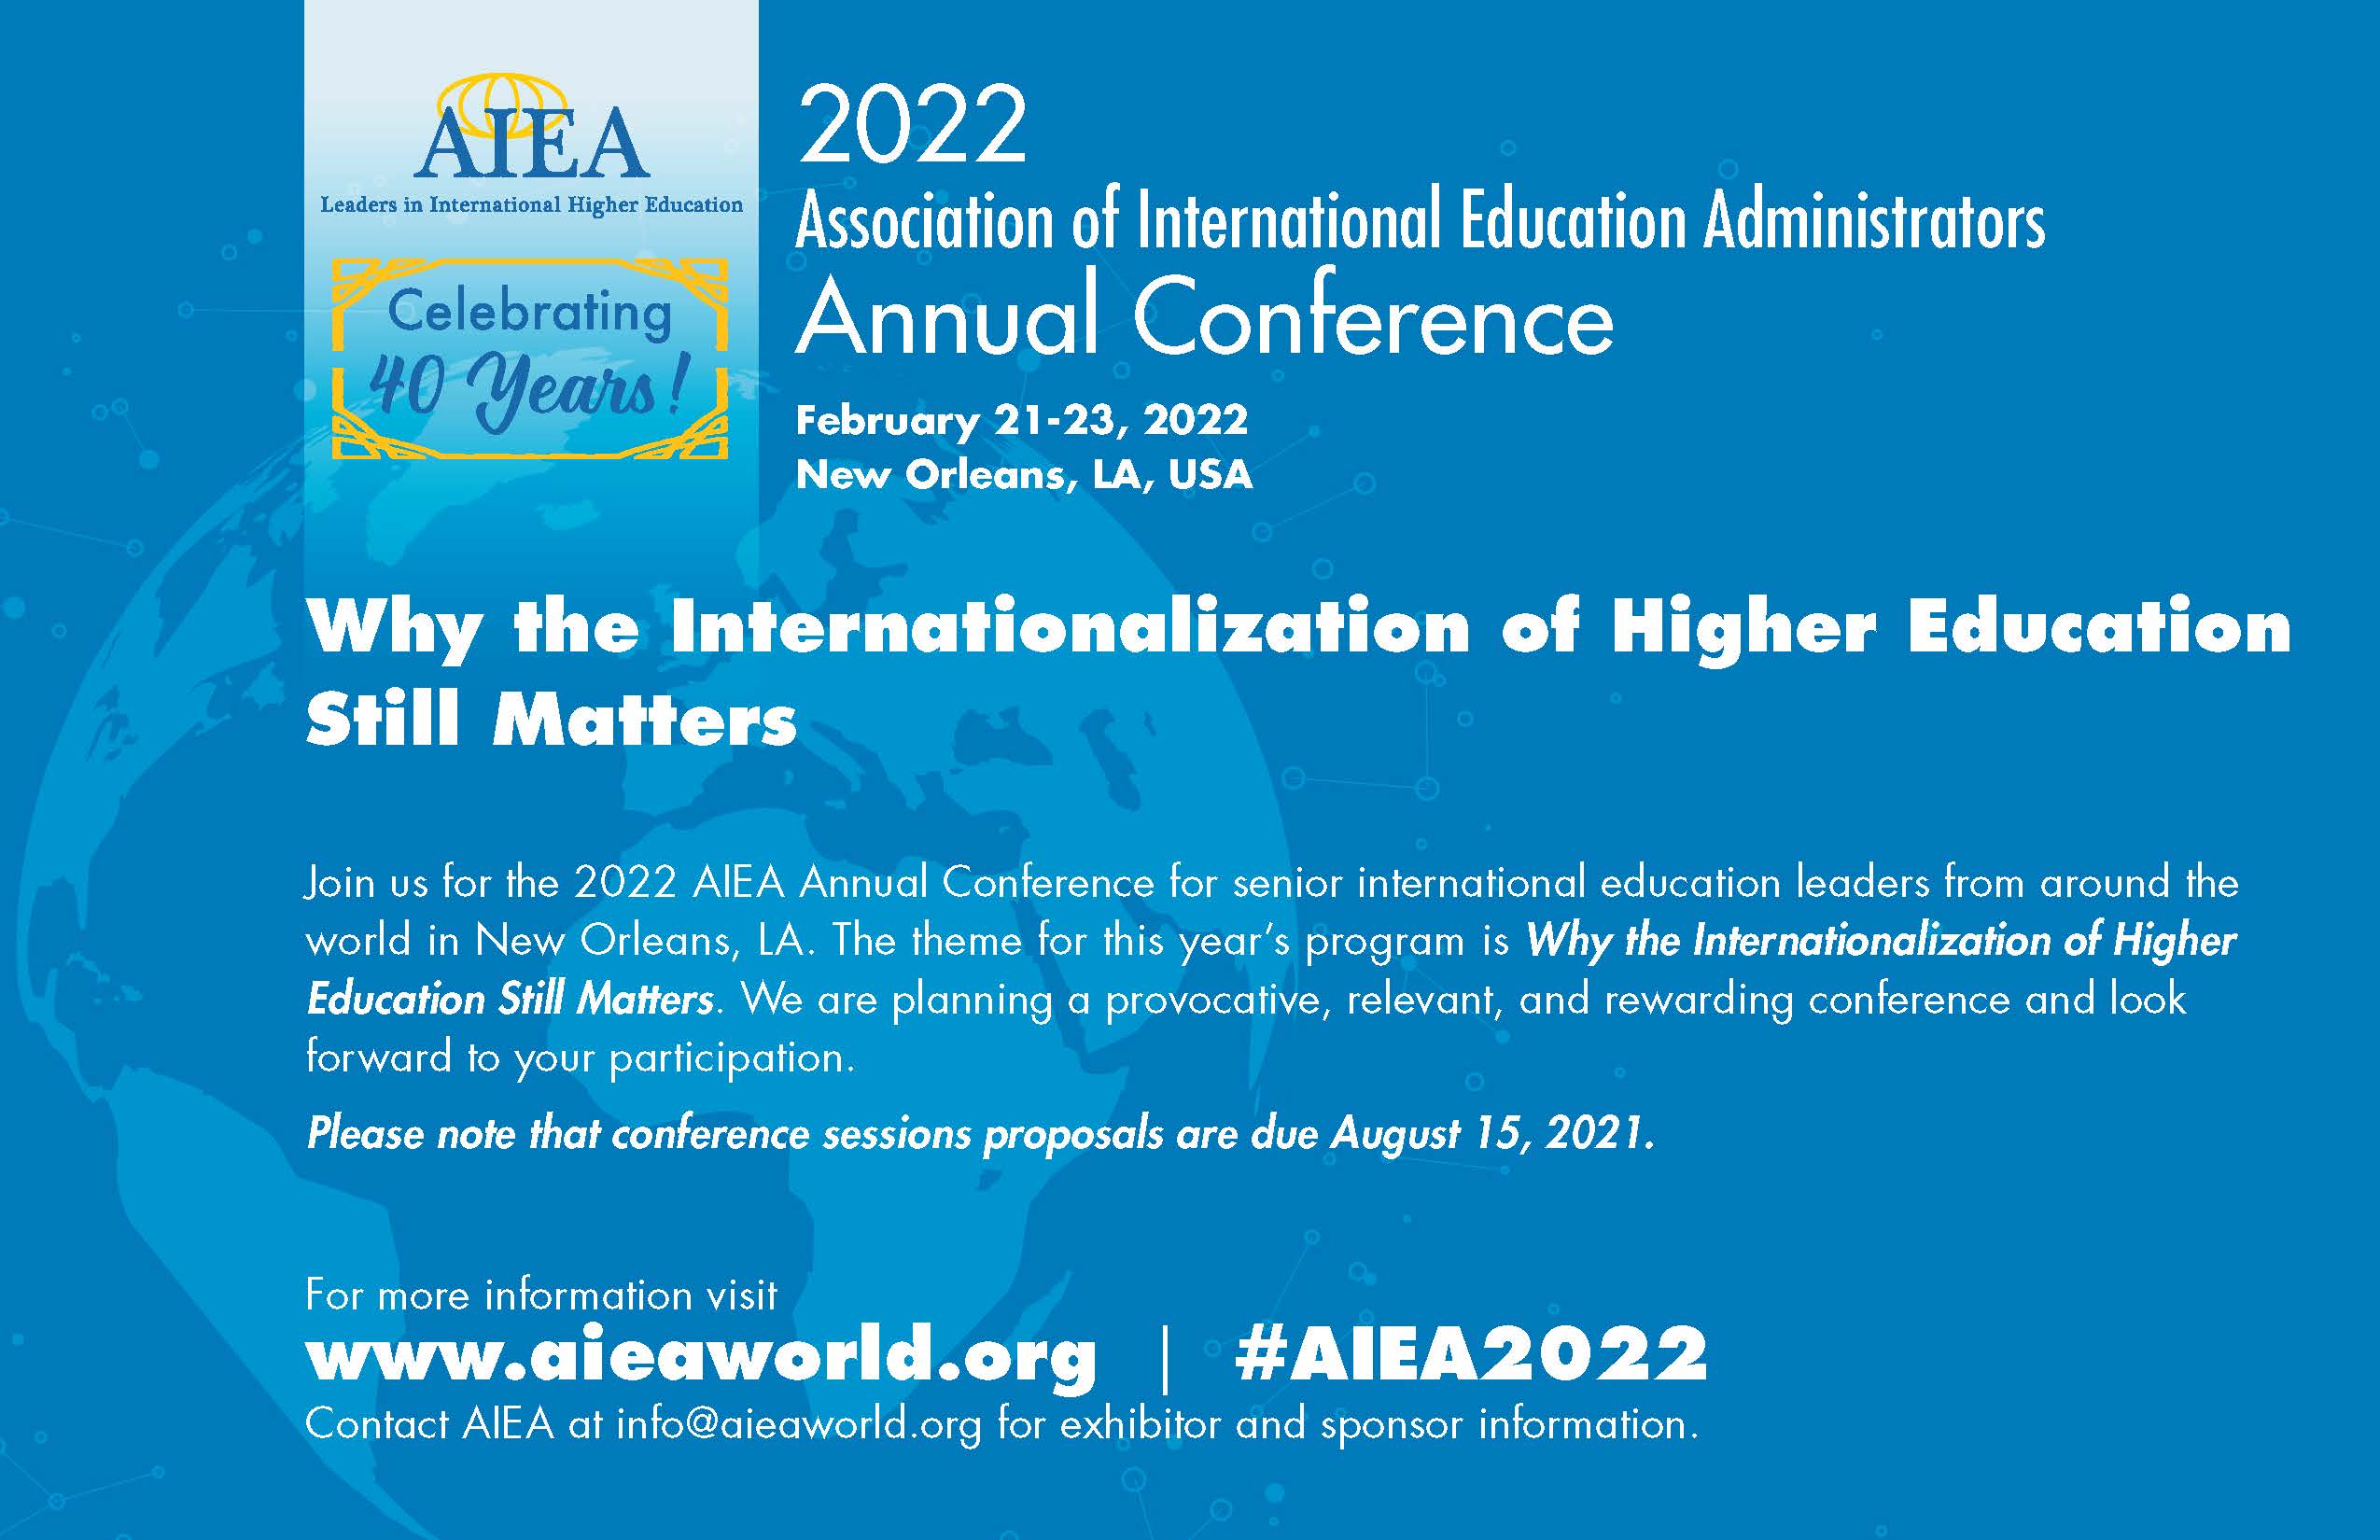 AIEA 2022 – Association of international Education Administrators